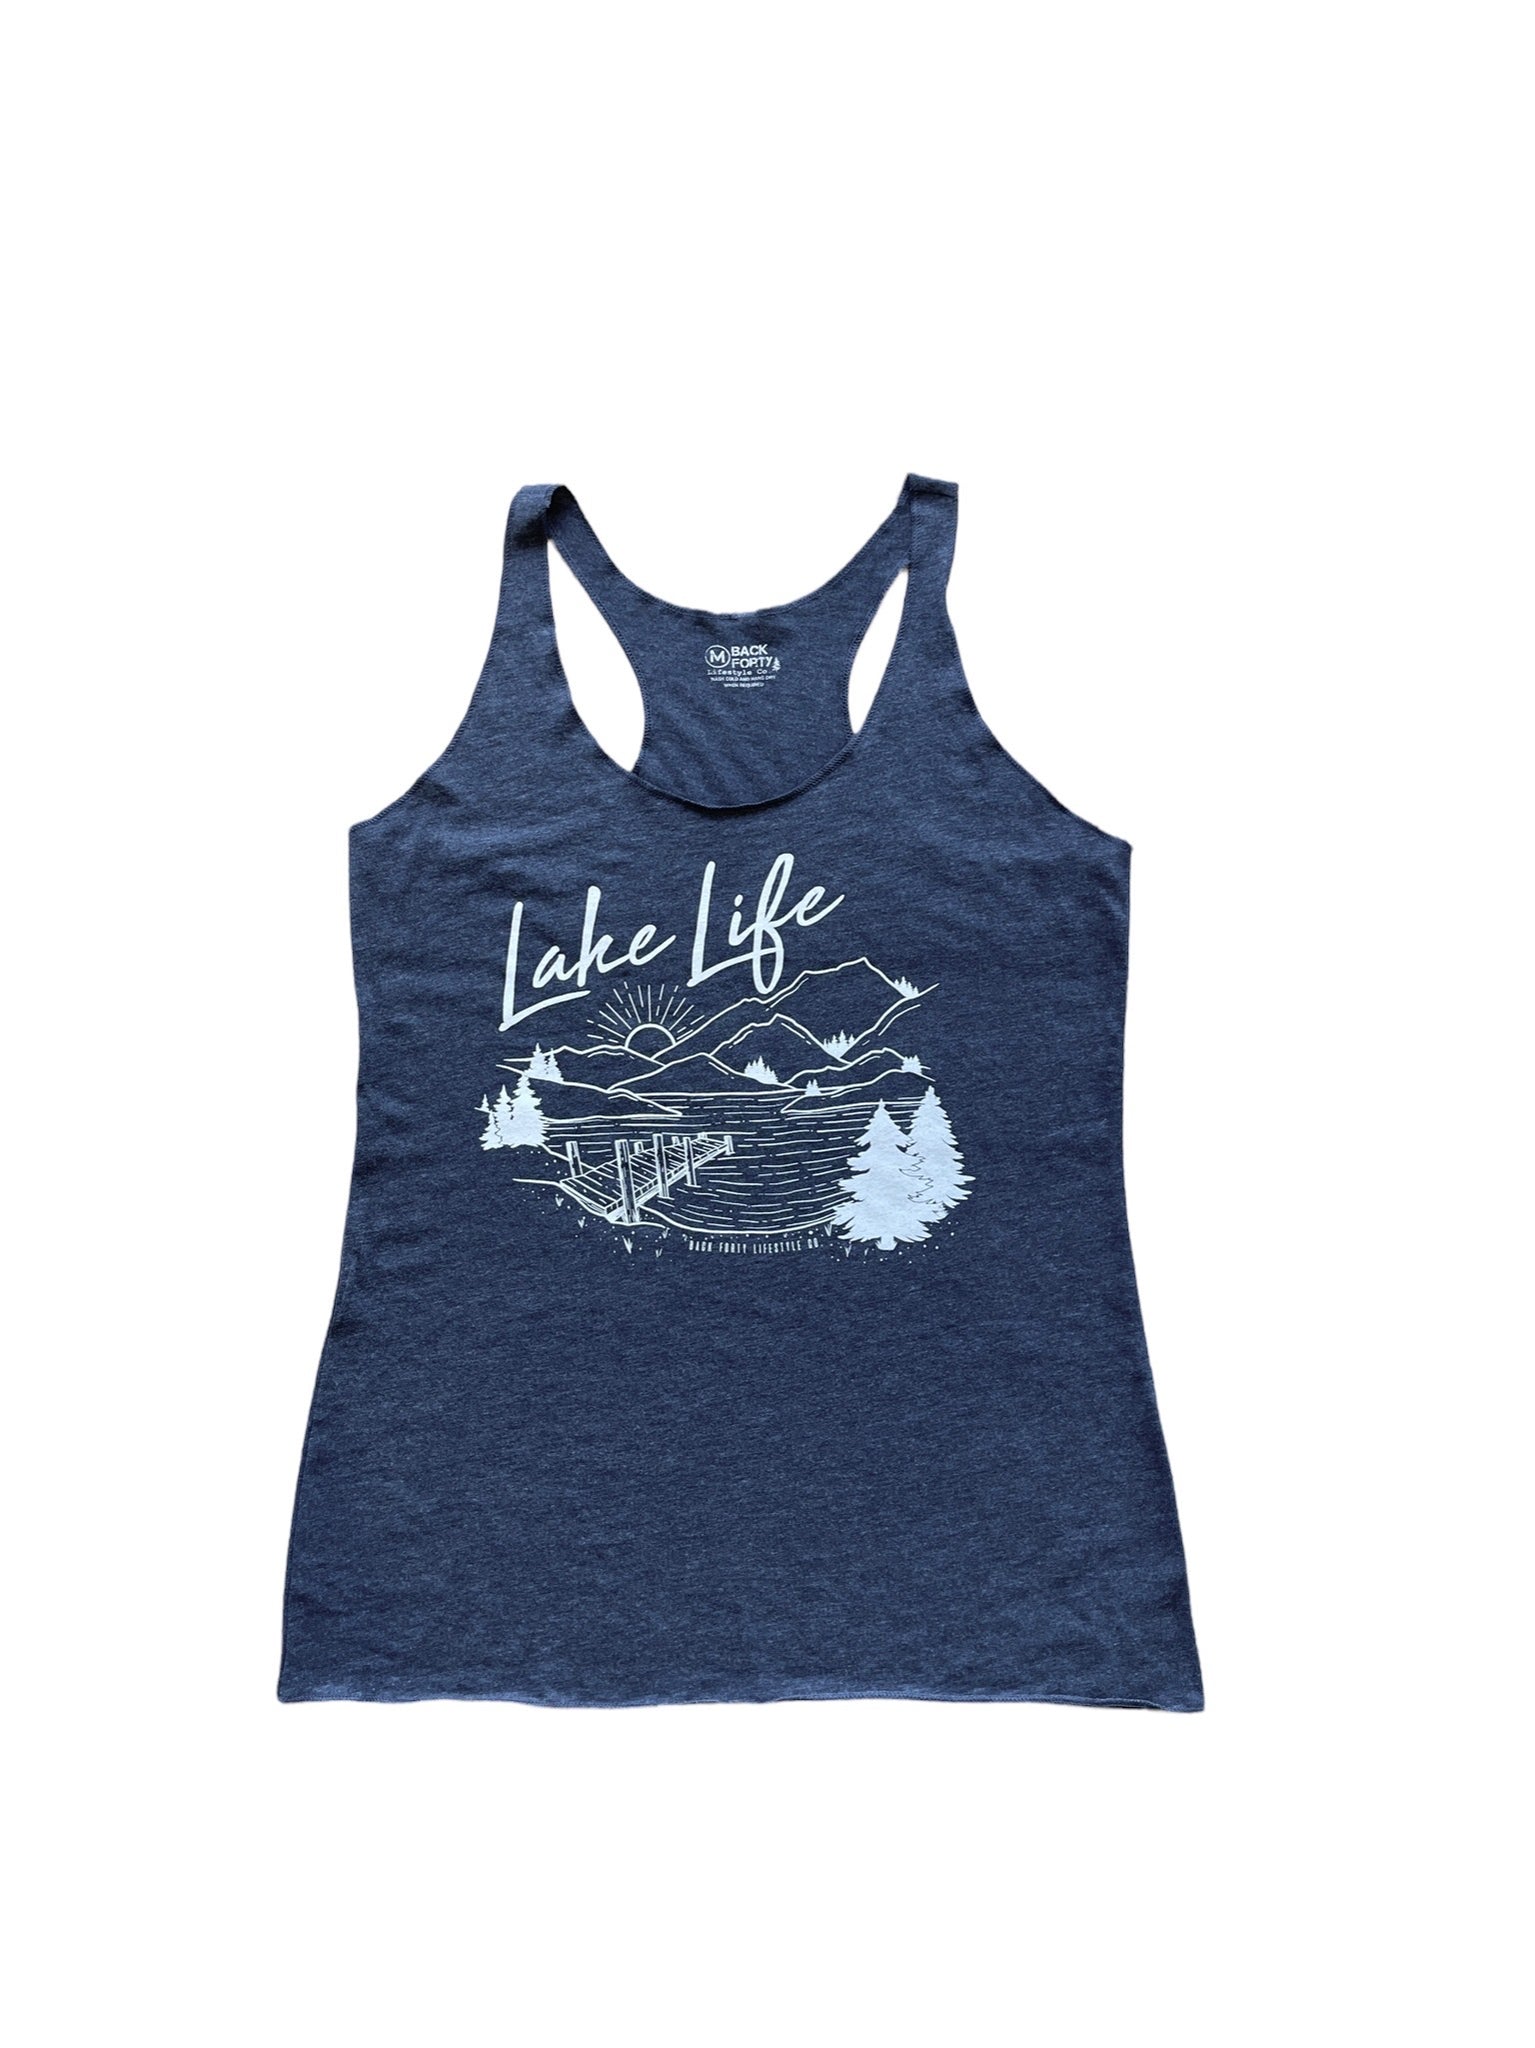 Lake Life Semi-Fitted Tank - Ladies